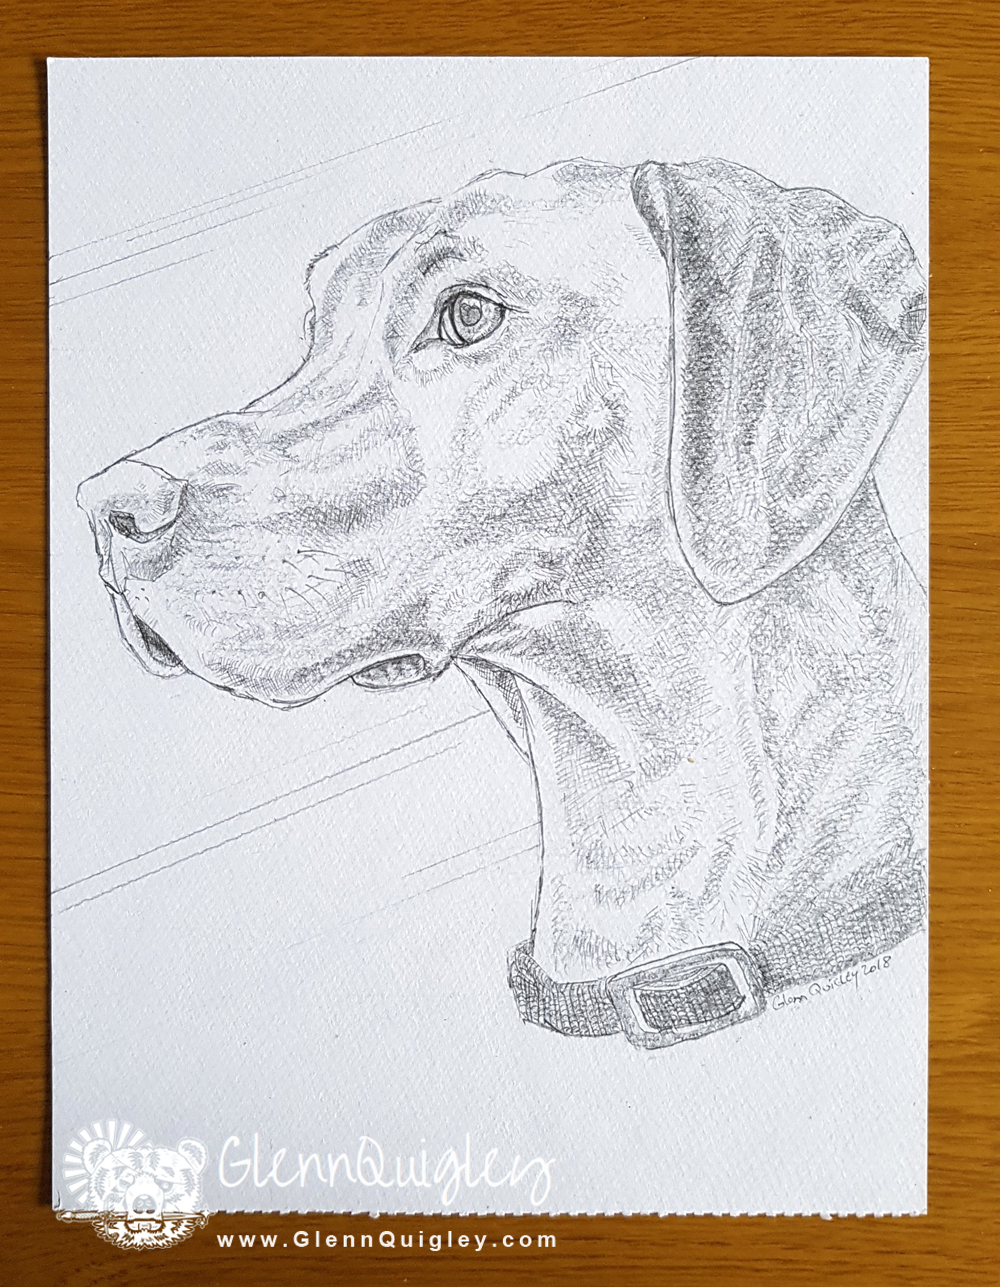 Pencil-drawing-of-Willow-Chris-Janaways-dog-2nd-April-2018-watermark-web